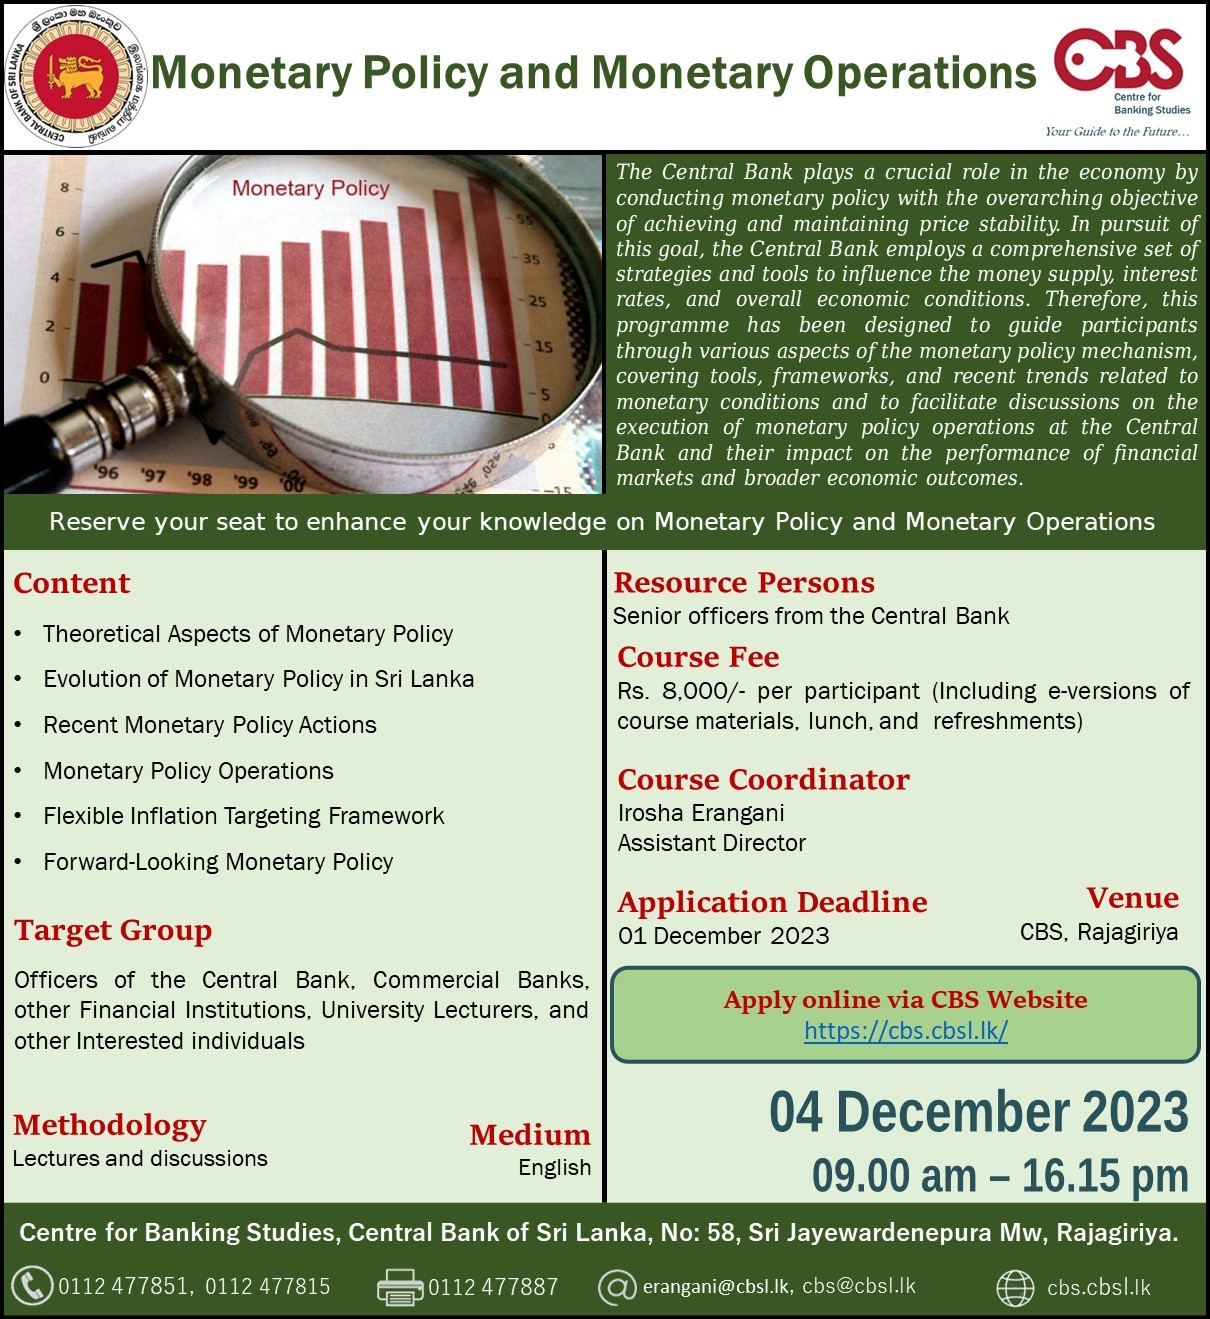 Monetary Policy and Monetary Operations - 04 December 2023